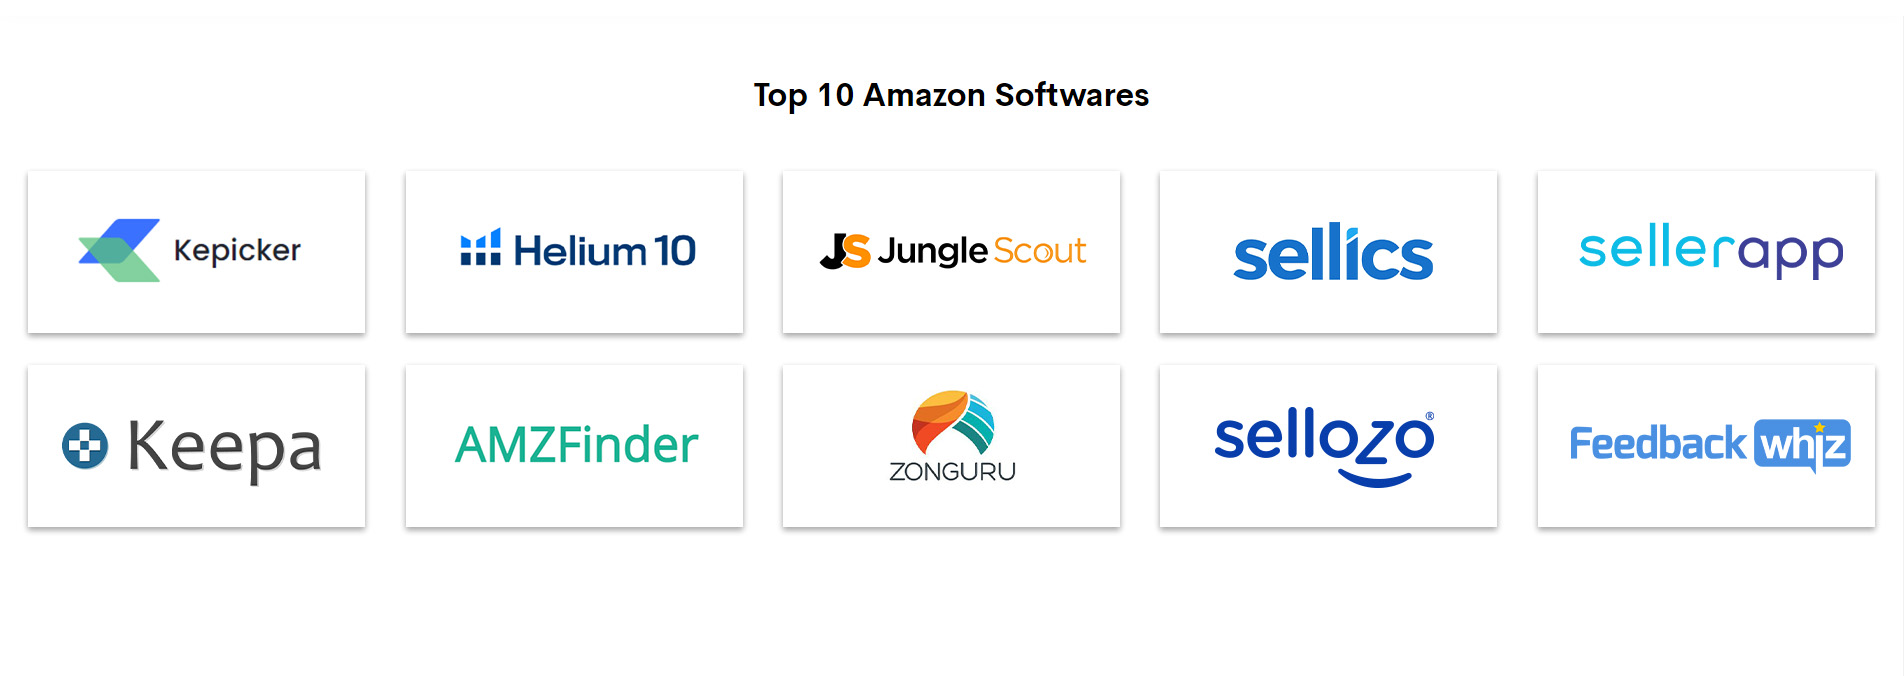 Top 10 Amazon Softwares